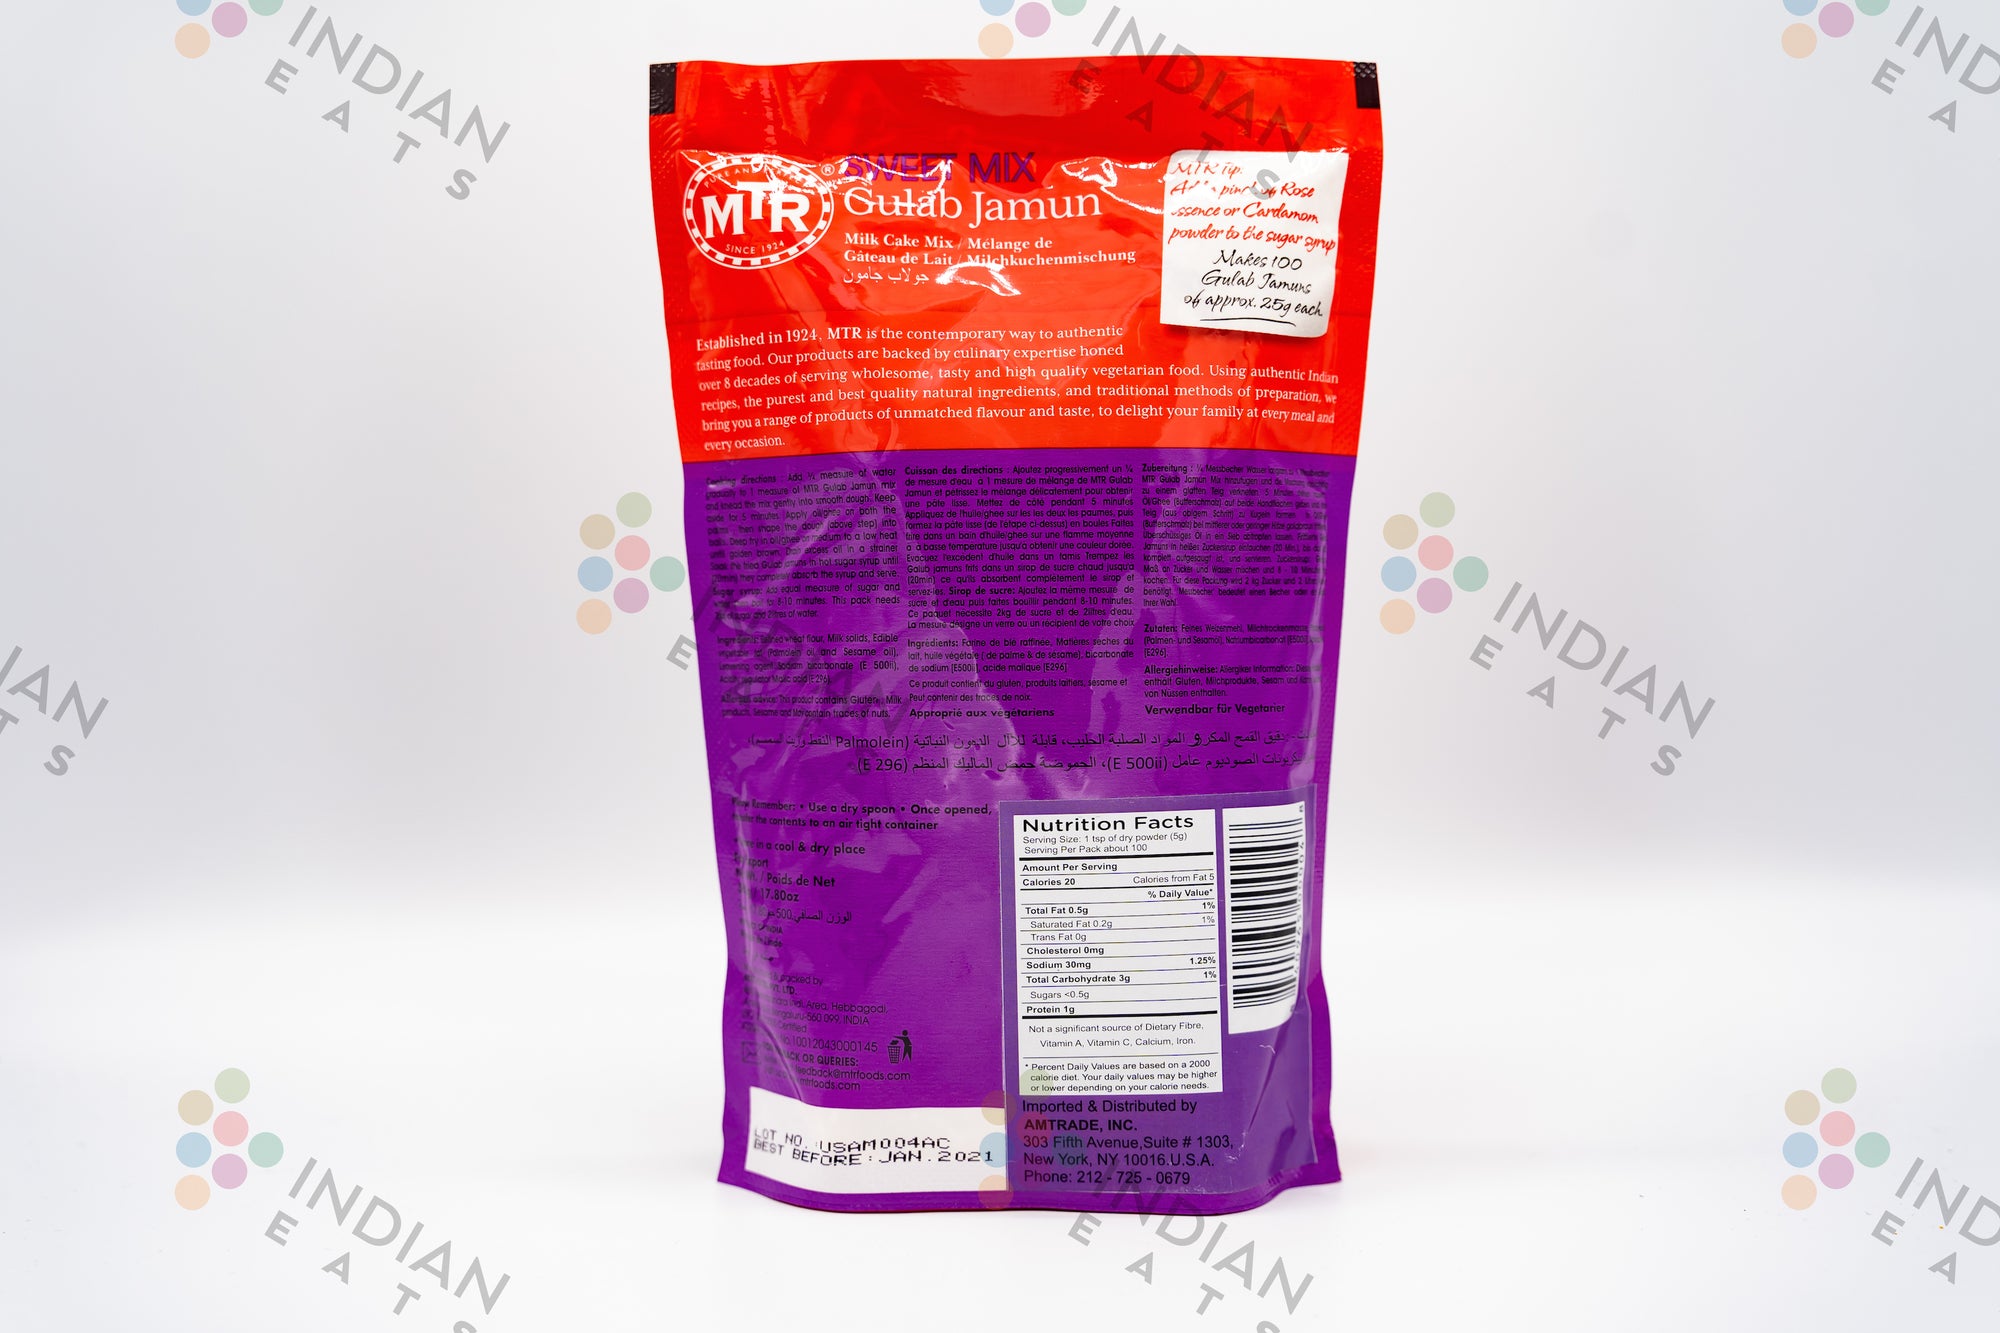 MTR - Tomato Rice Powder - (spice mix for tomato rice) - 100g | eBay